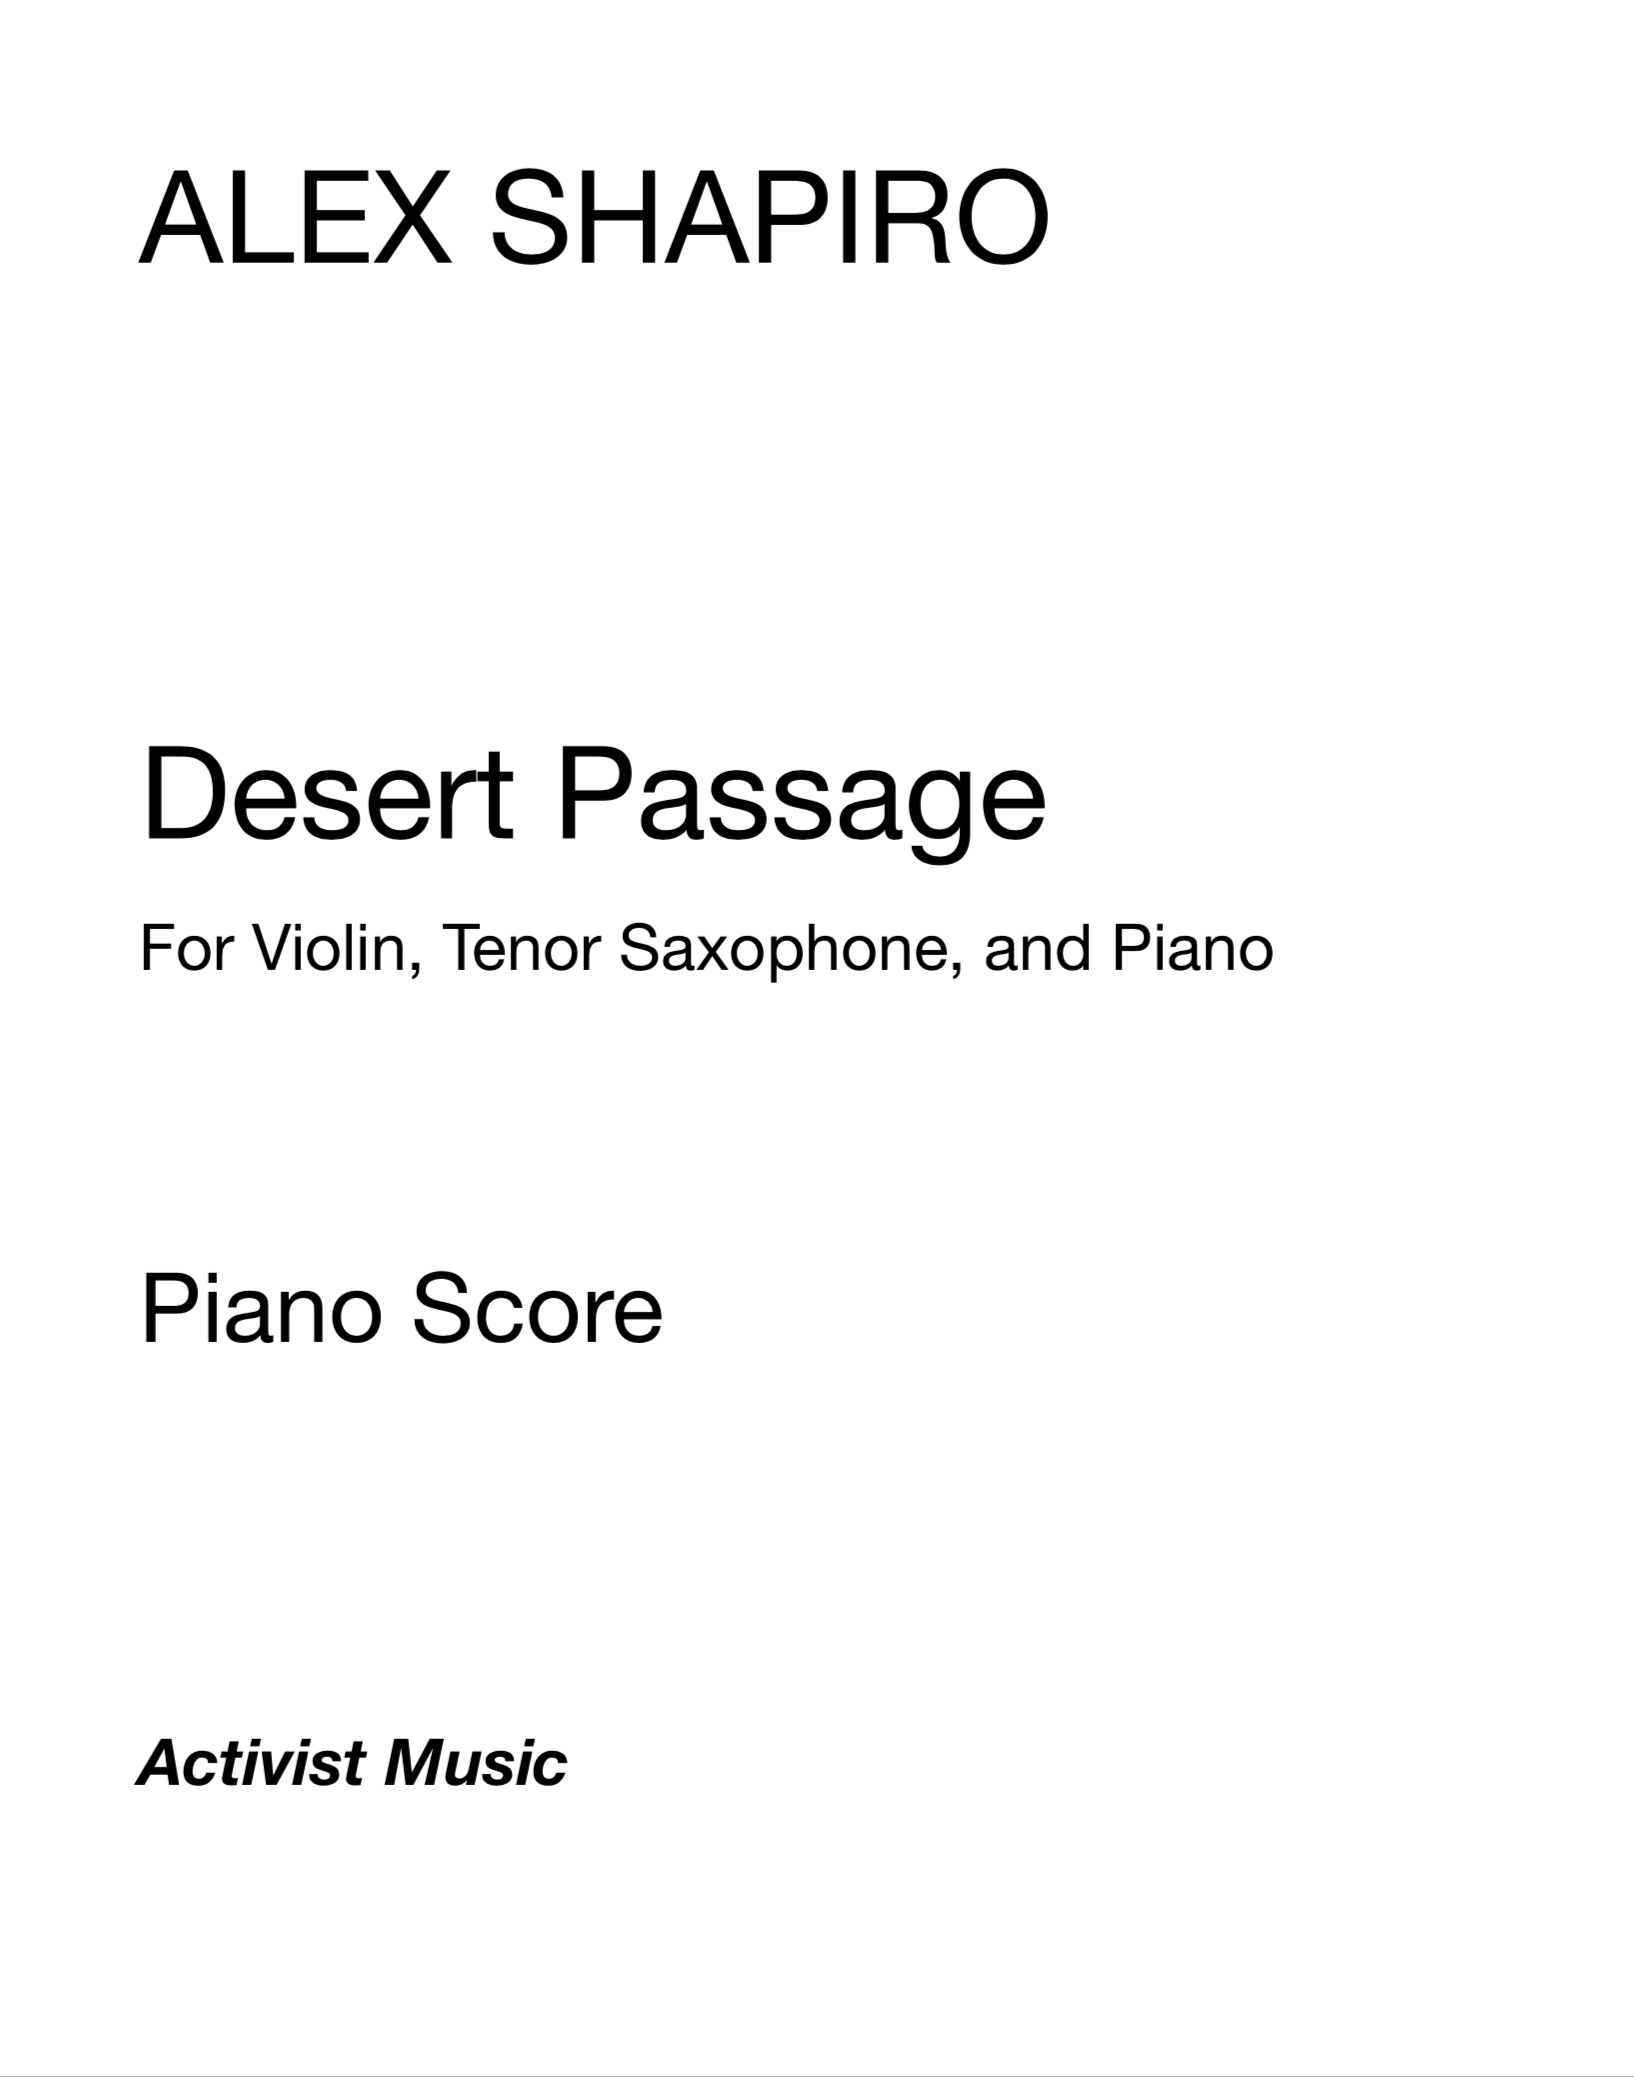 Desert Passage  by Alex Shapiro